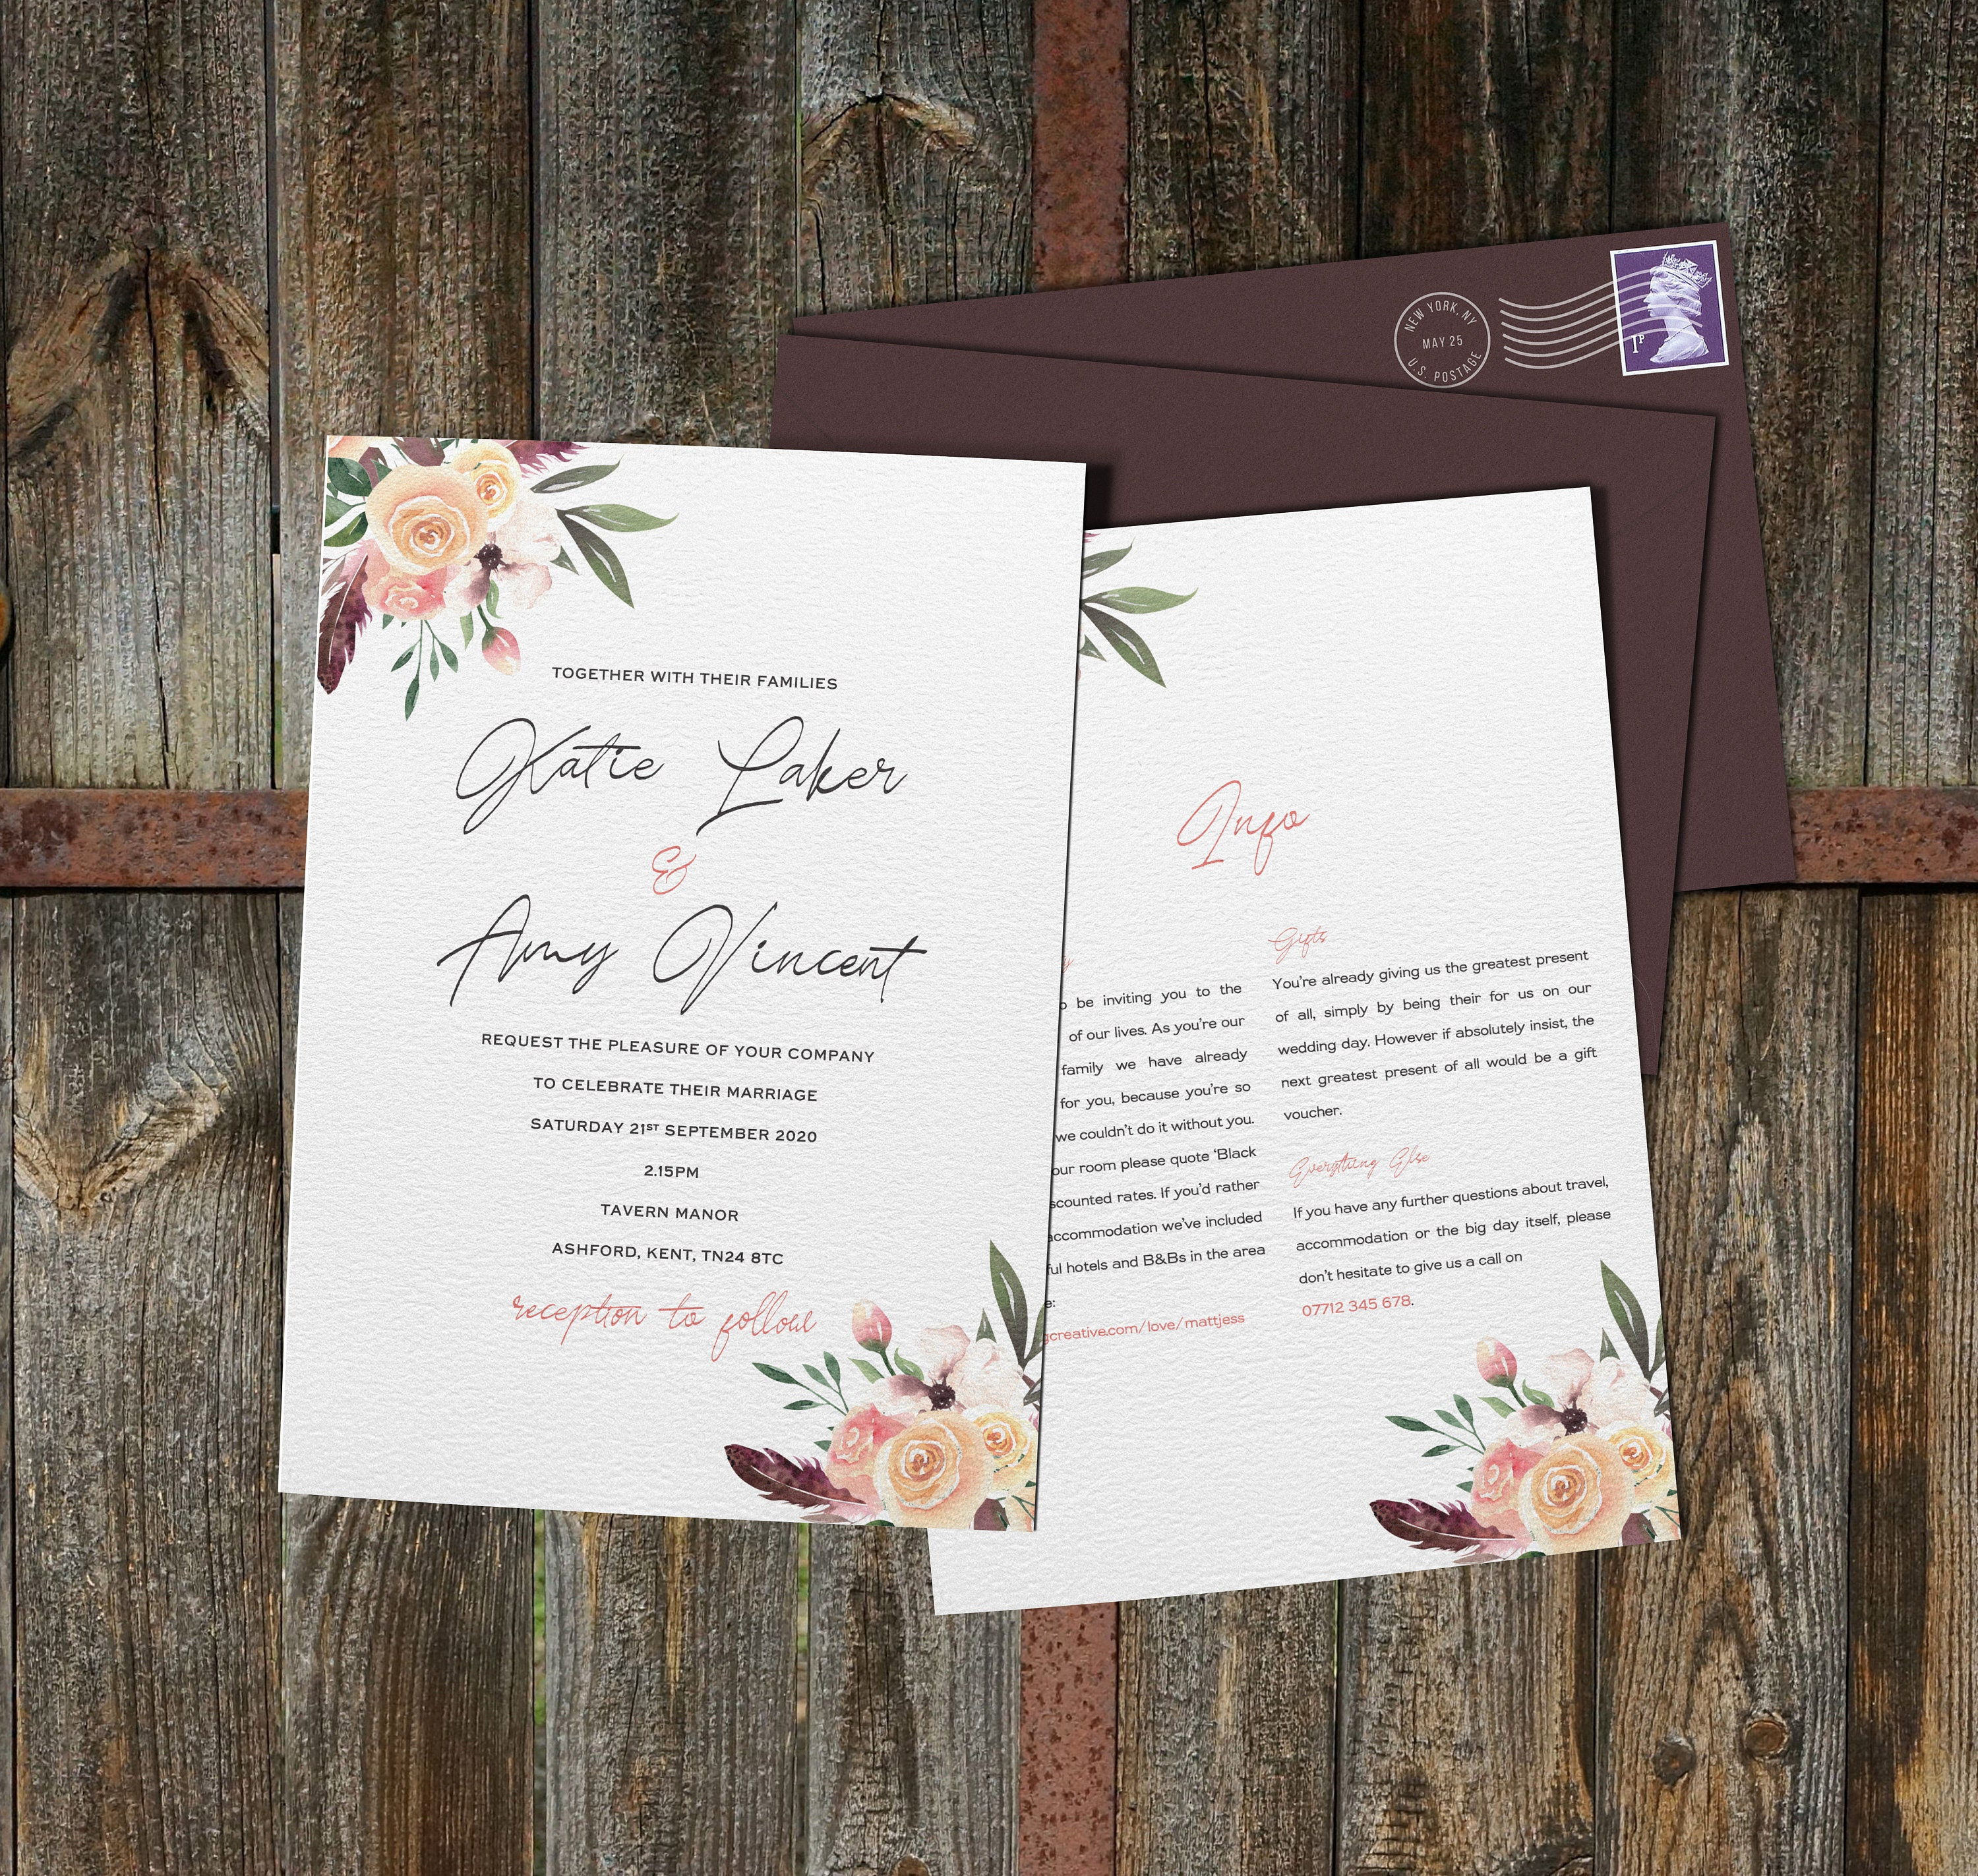 Romantic Wedding Invitation Calligraphy Wedding Invites Includes Envelope and Return Address Printing Printed Invitations Floral